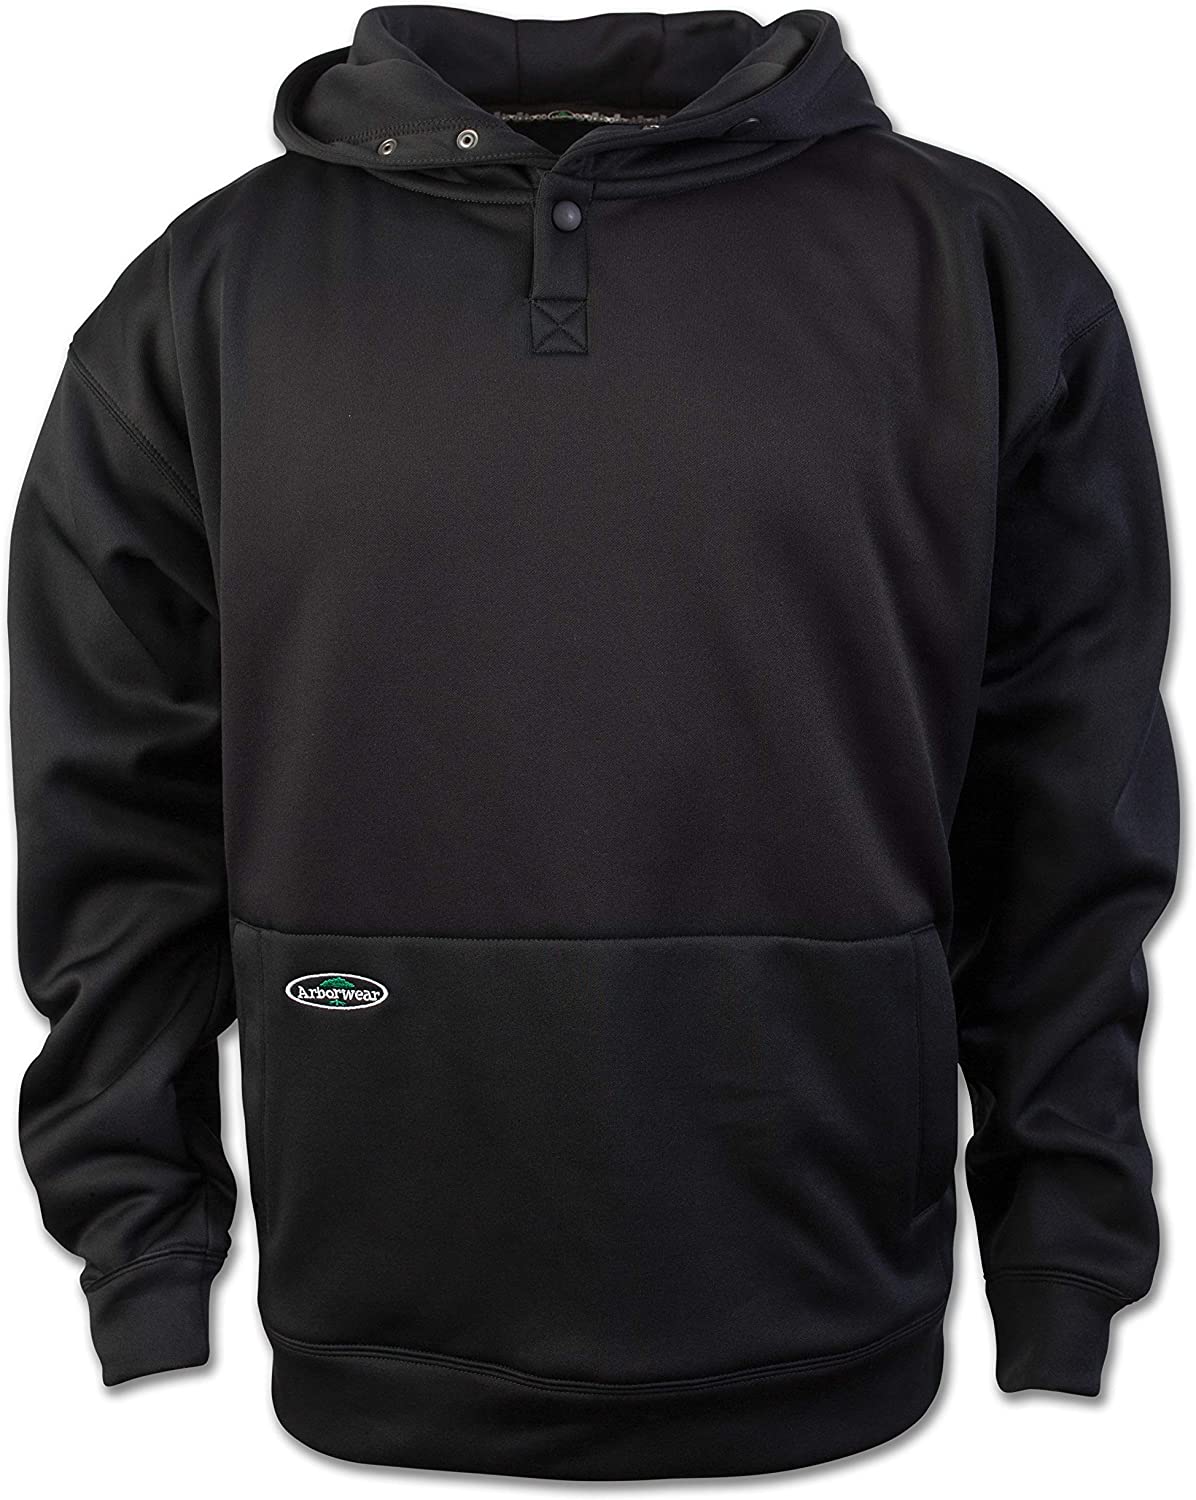 Men's Arborwear Tech Double Thick Pullover in Black